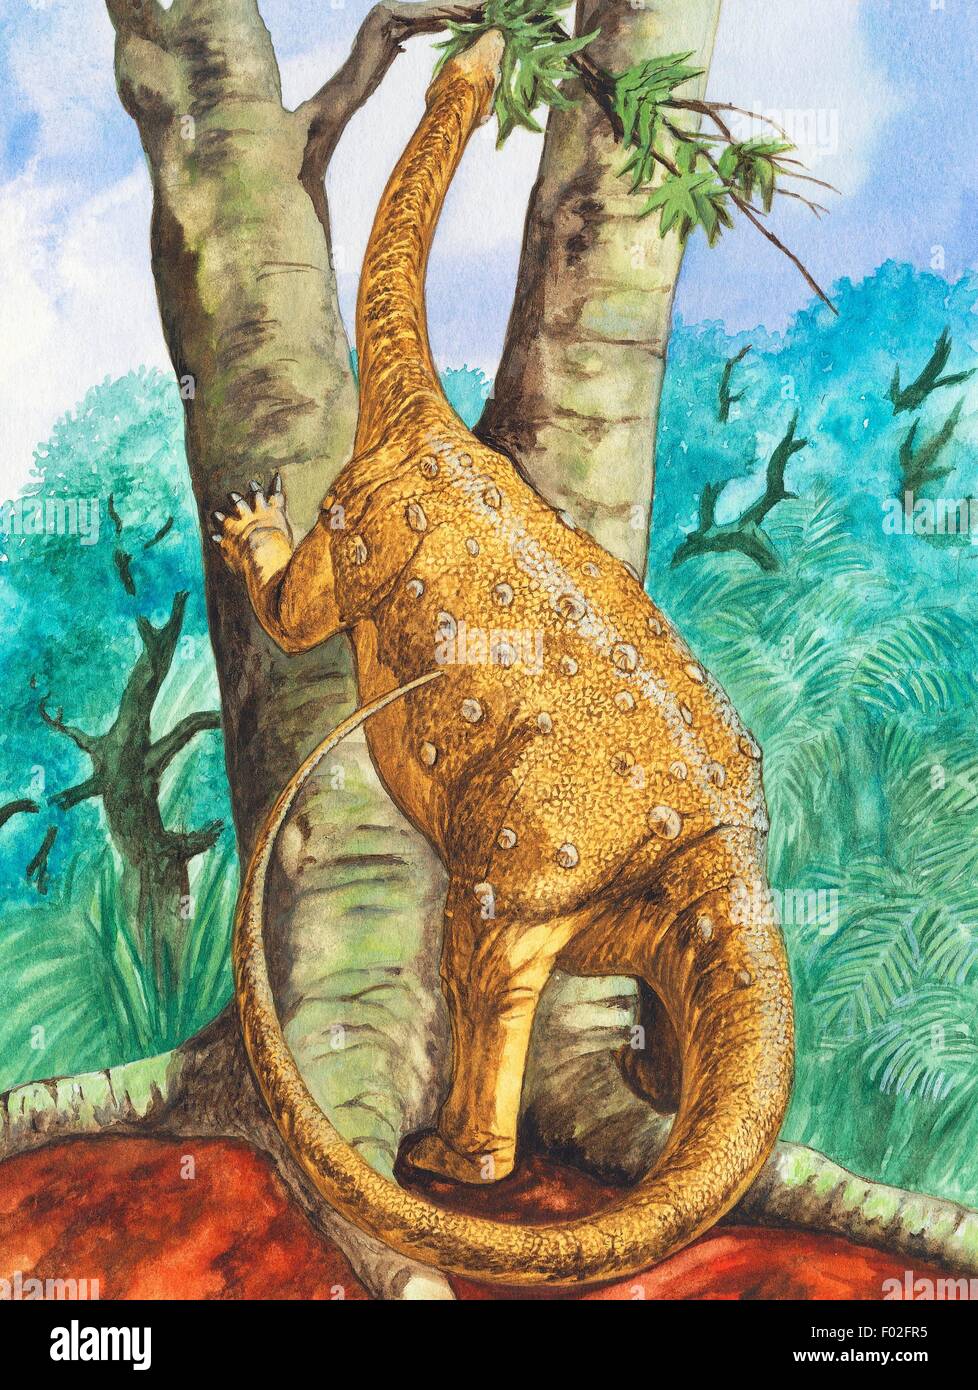 Laplatasaurus araukanicus, Titanosauroidea, Late Cretaceous. Illustration. Stock Photo